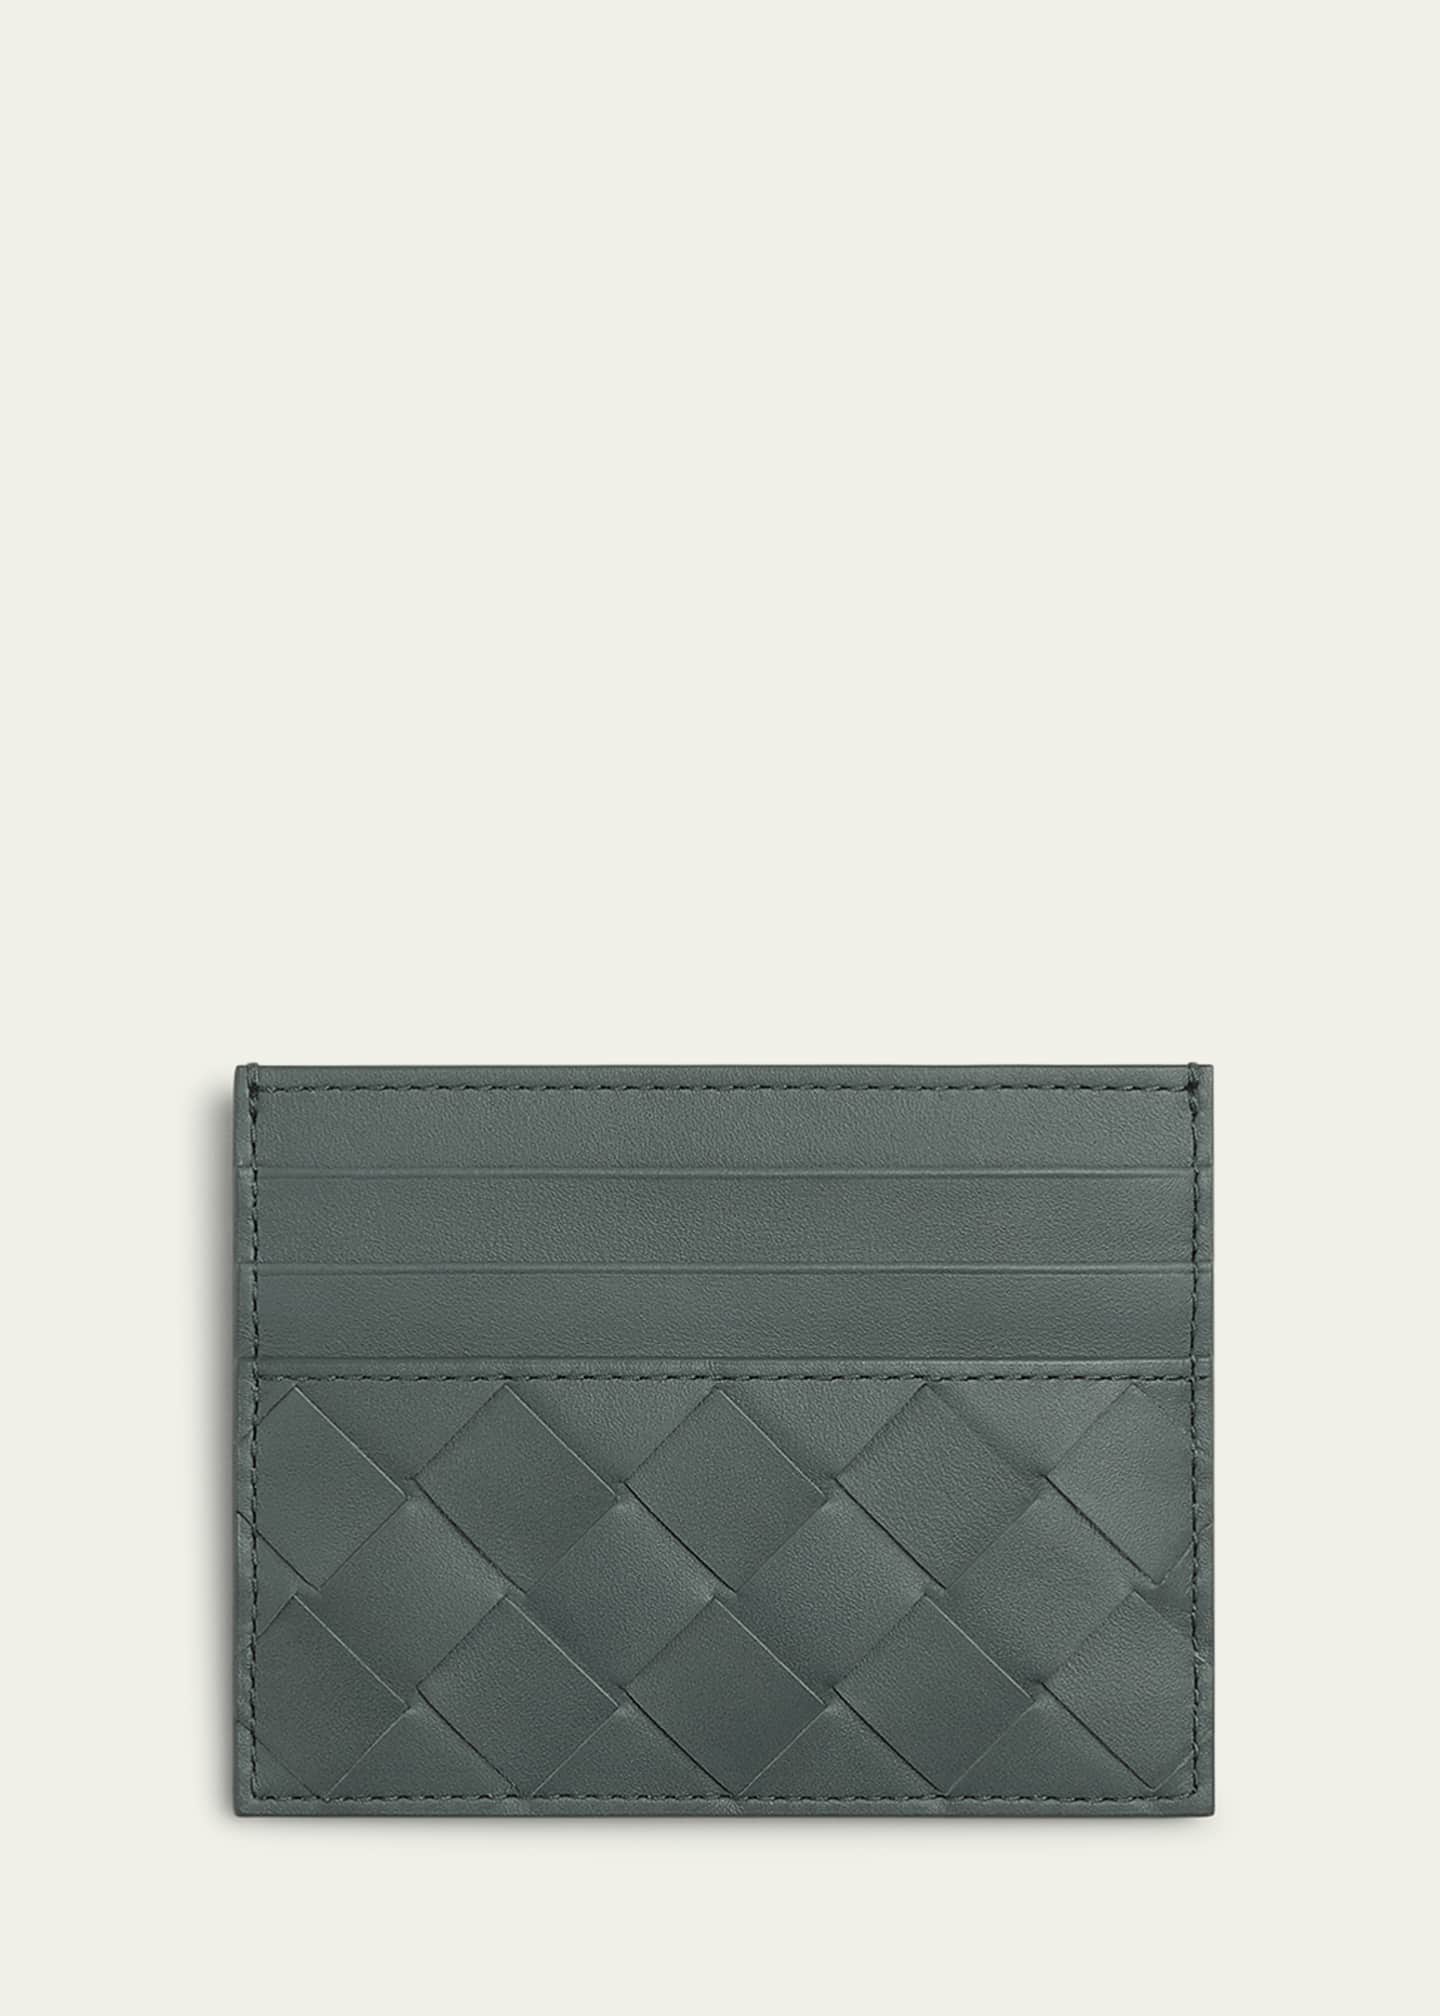 Bottega Veneta Men's Intrecciato Leather Slippers - Bergdorf Goodman